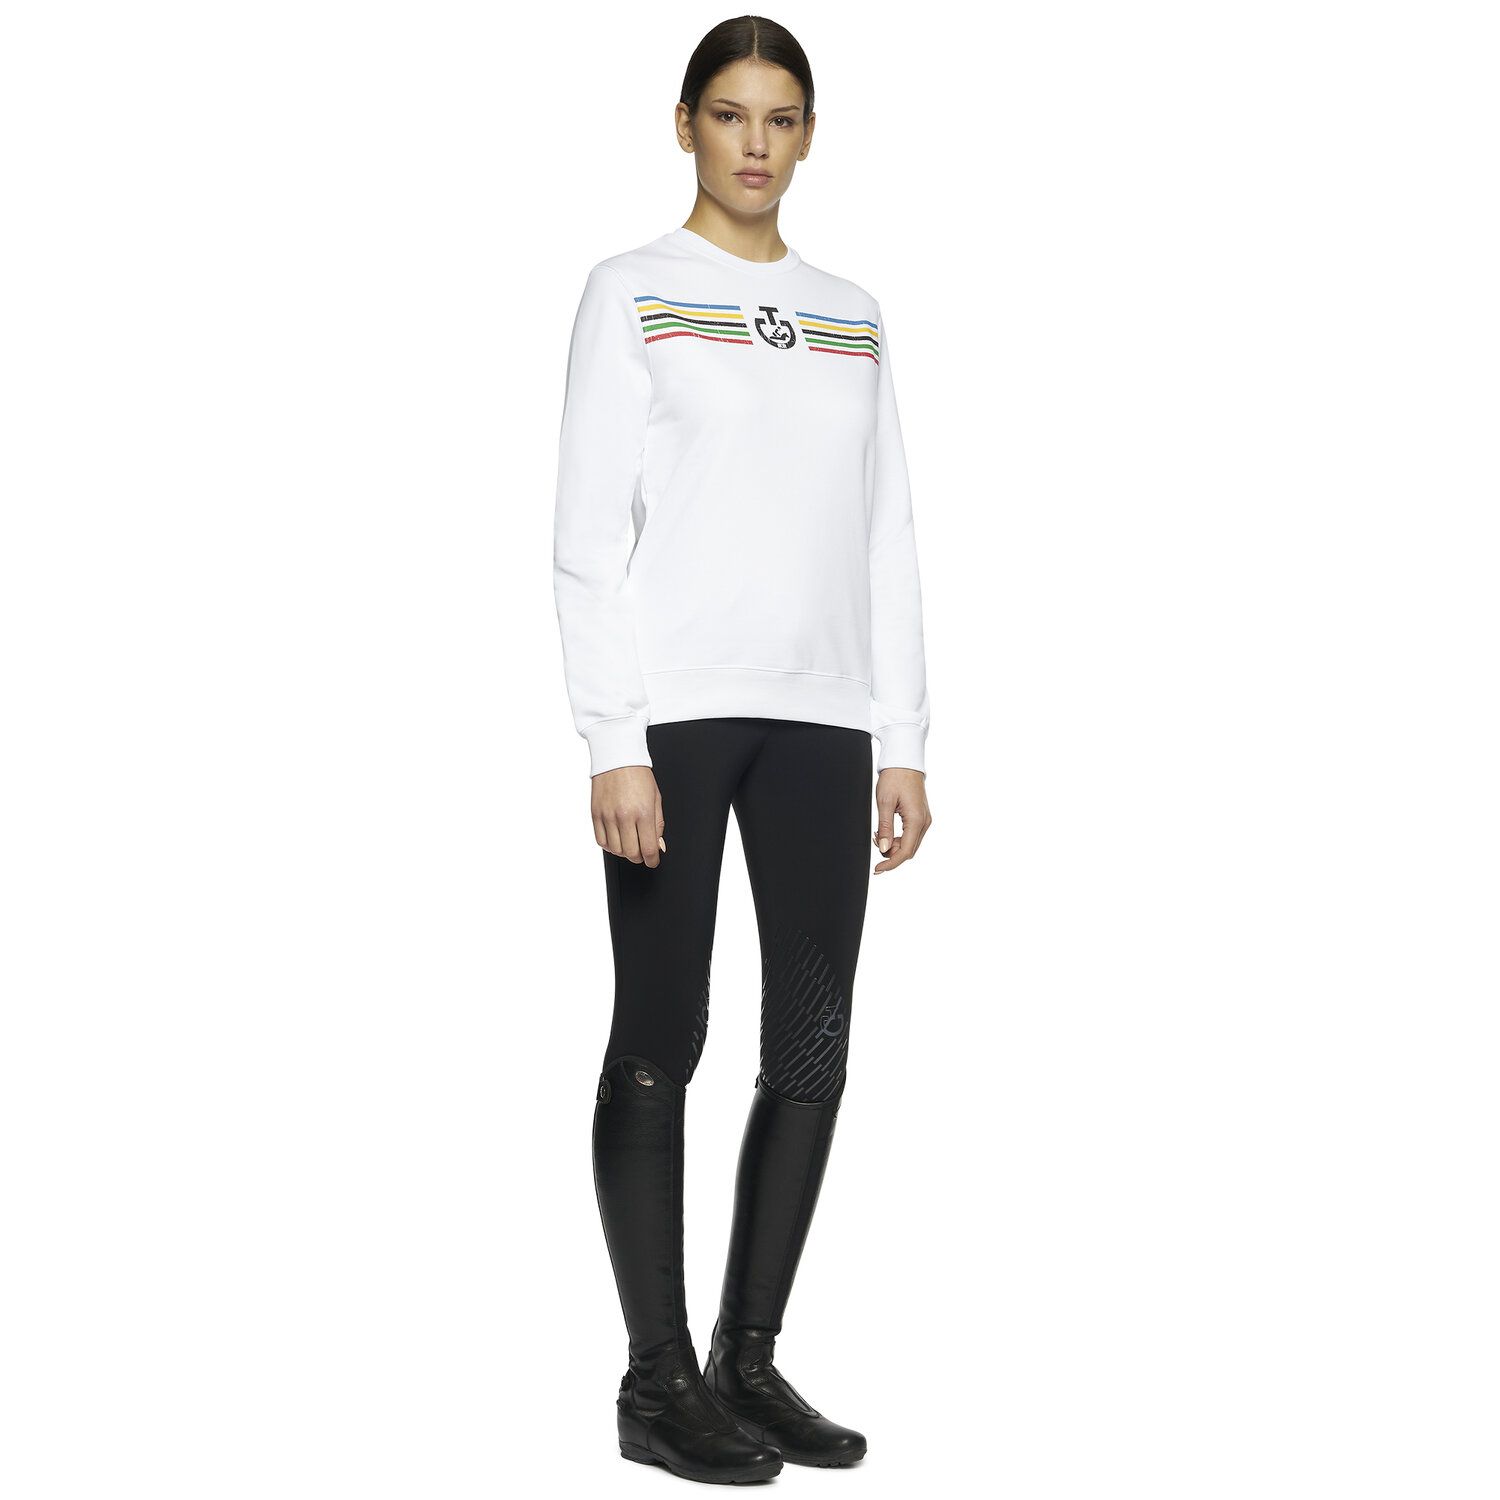 Cavalleria Toscana Women's Sweatshirt WHITE-2